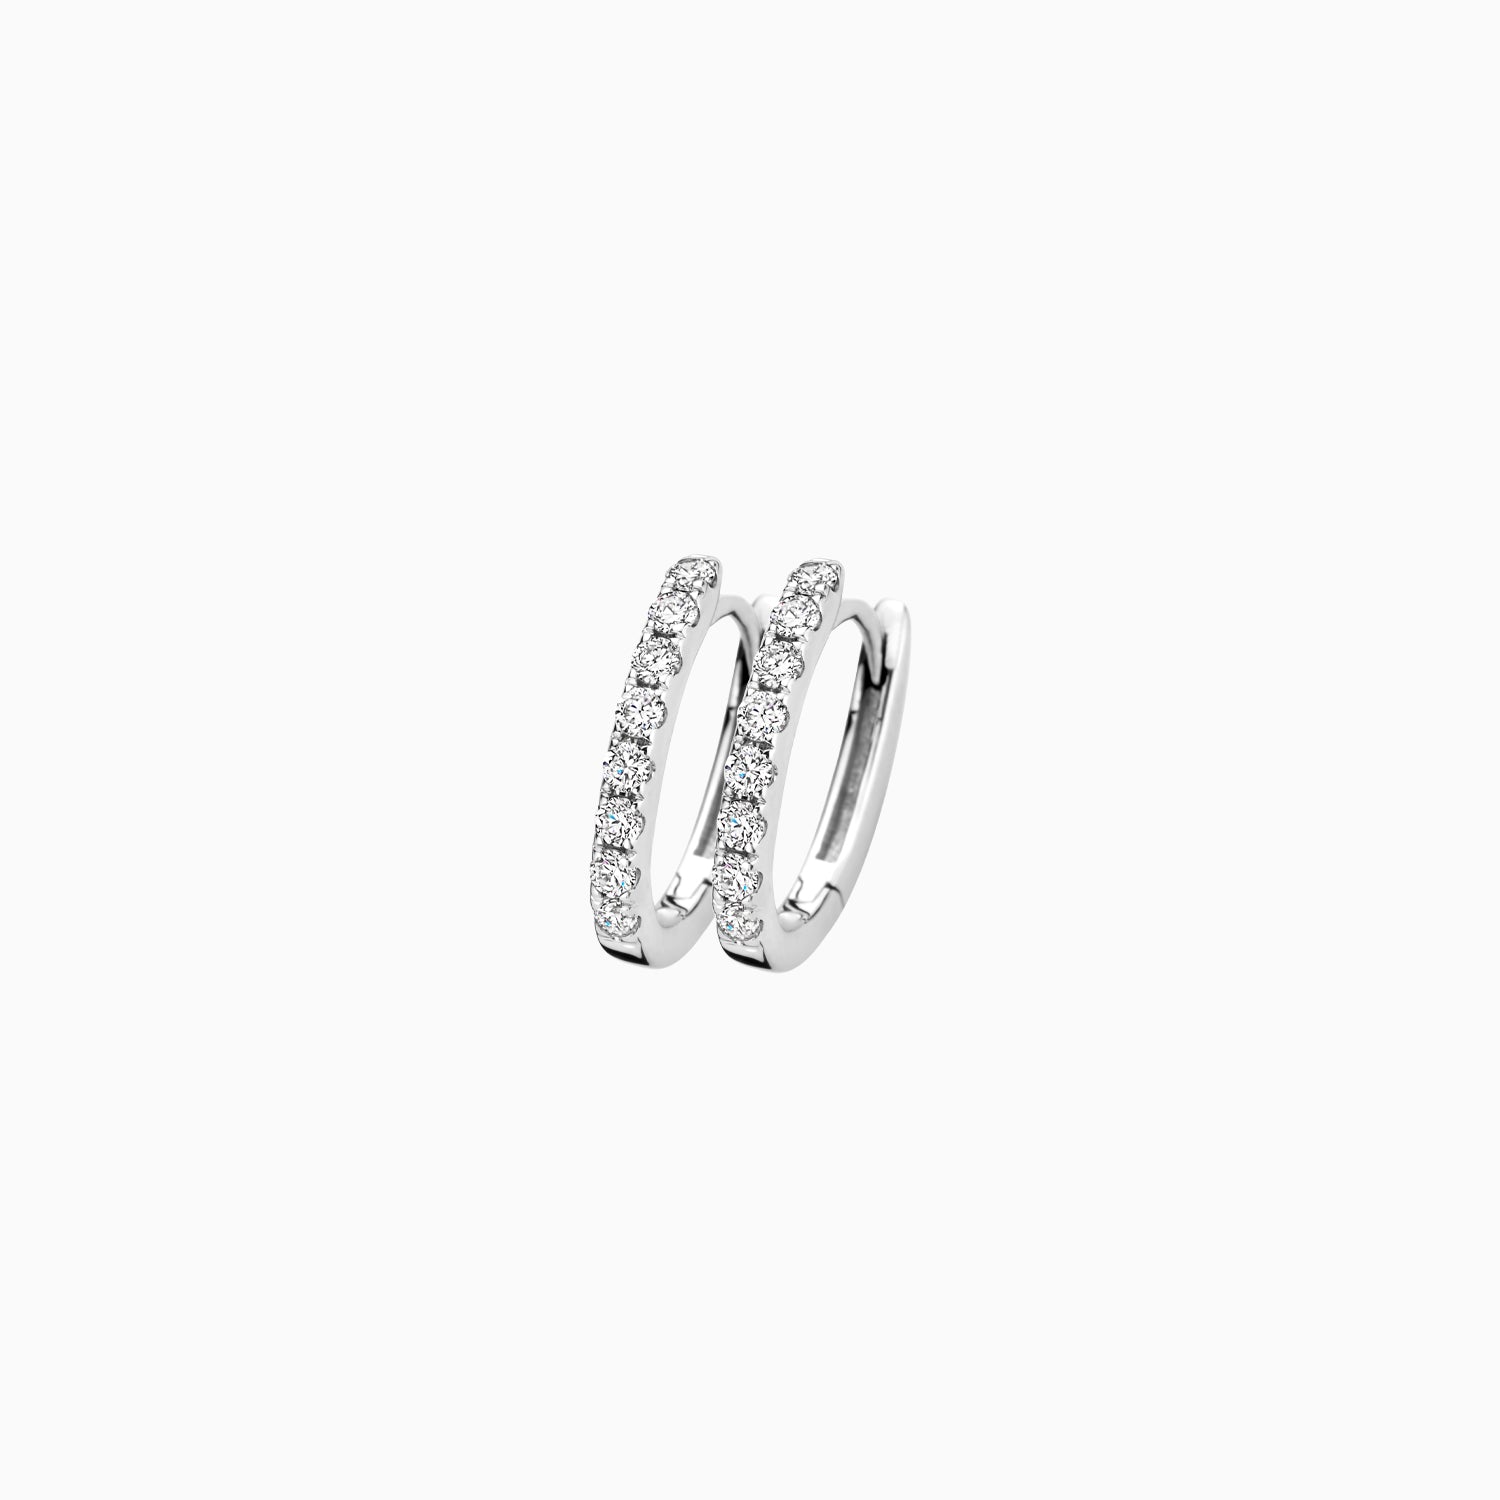 Lab diamonds earrings LG7006W - 14k White gold